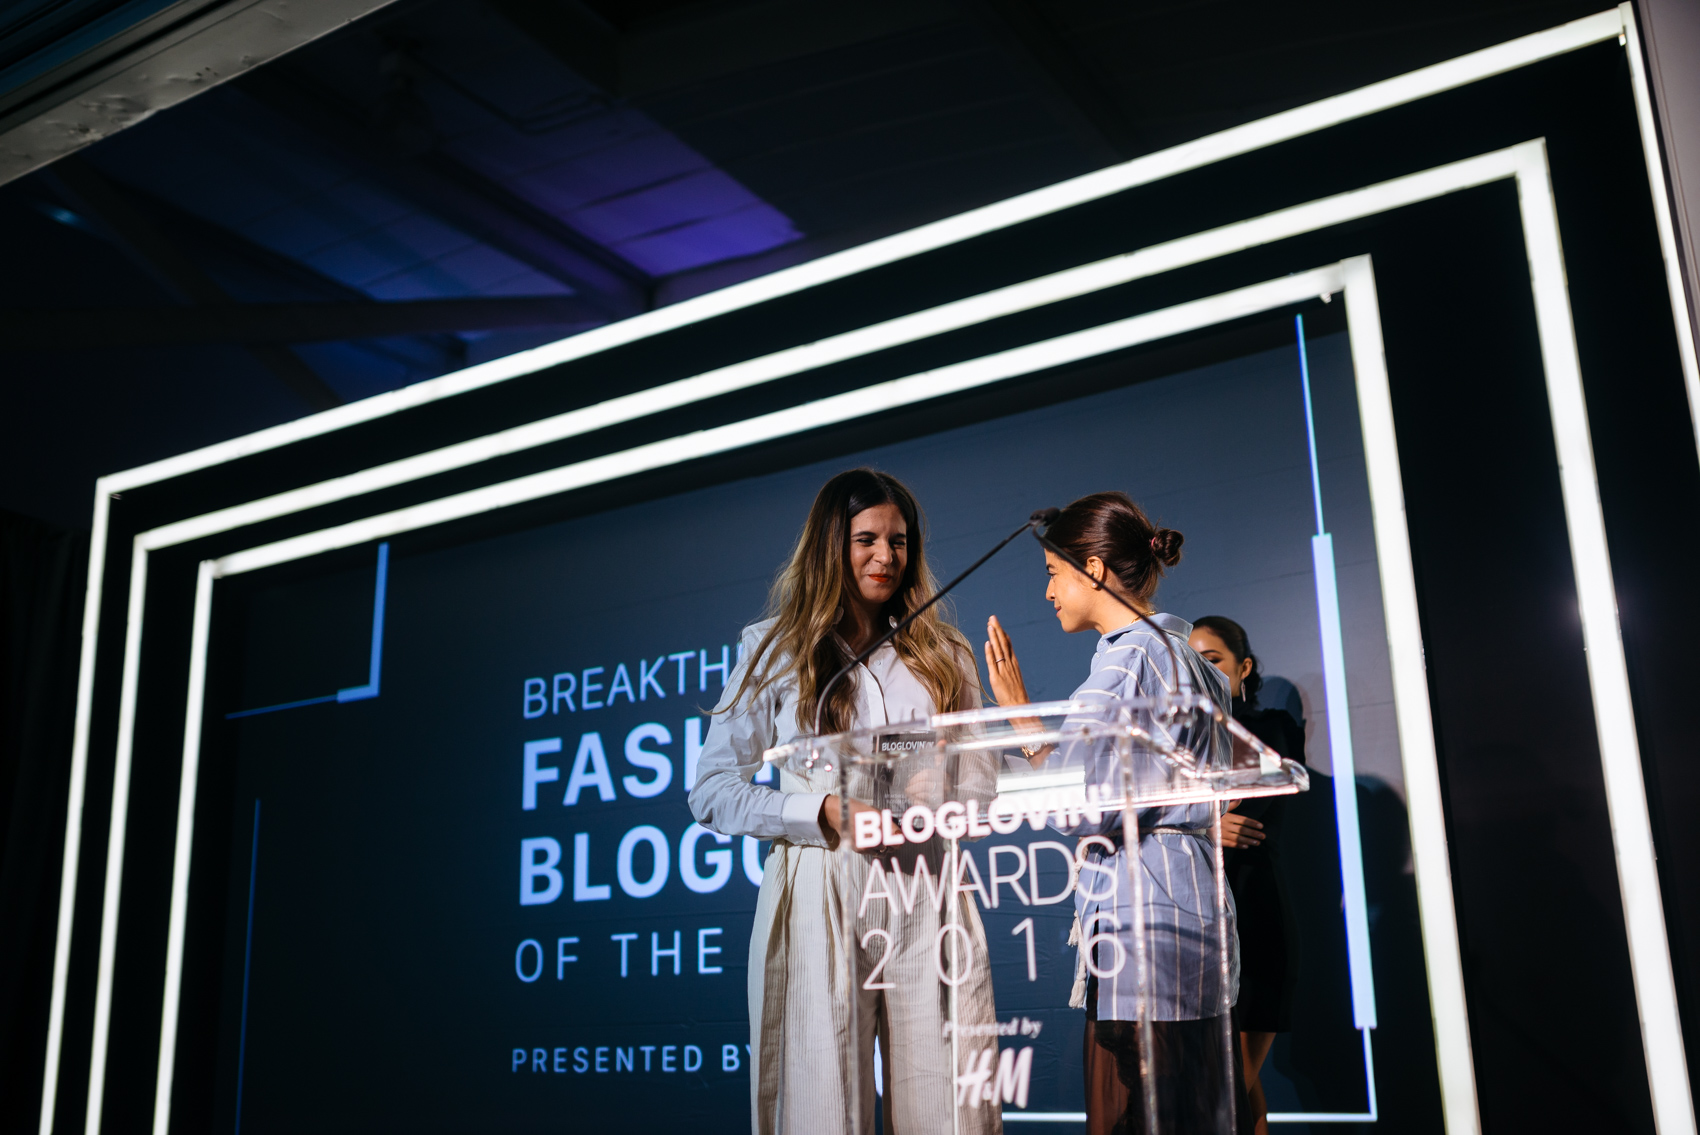 Maristella wins Breakthrough Fashion Blogger of the Year at the 2016 Bloglovin Awards